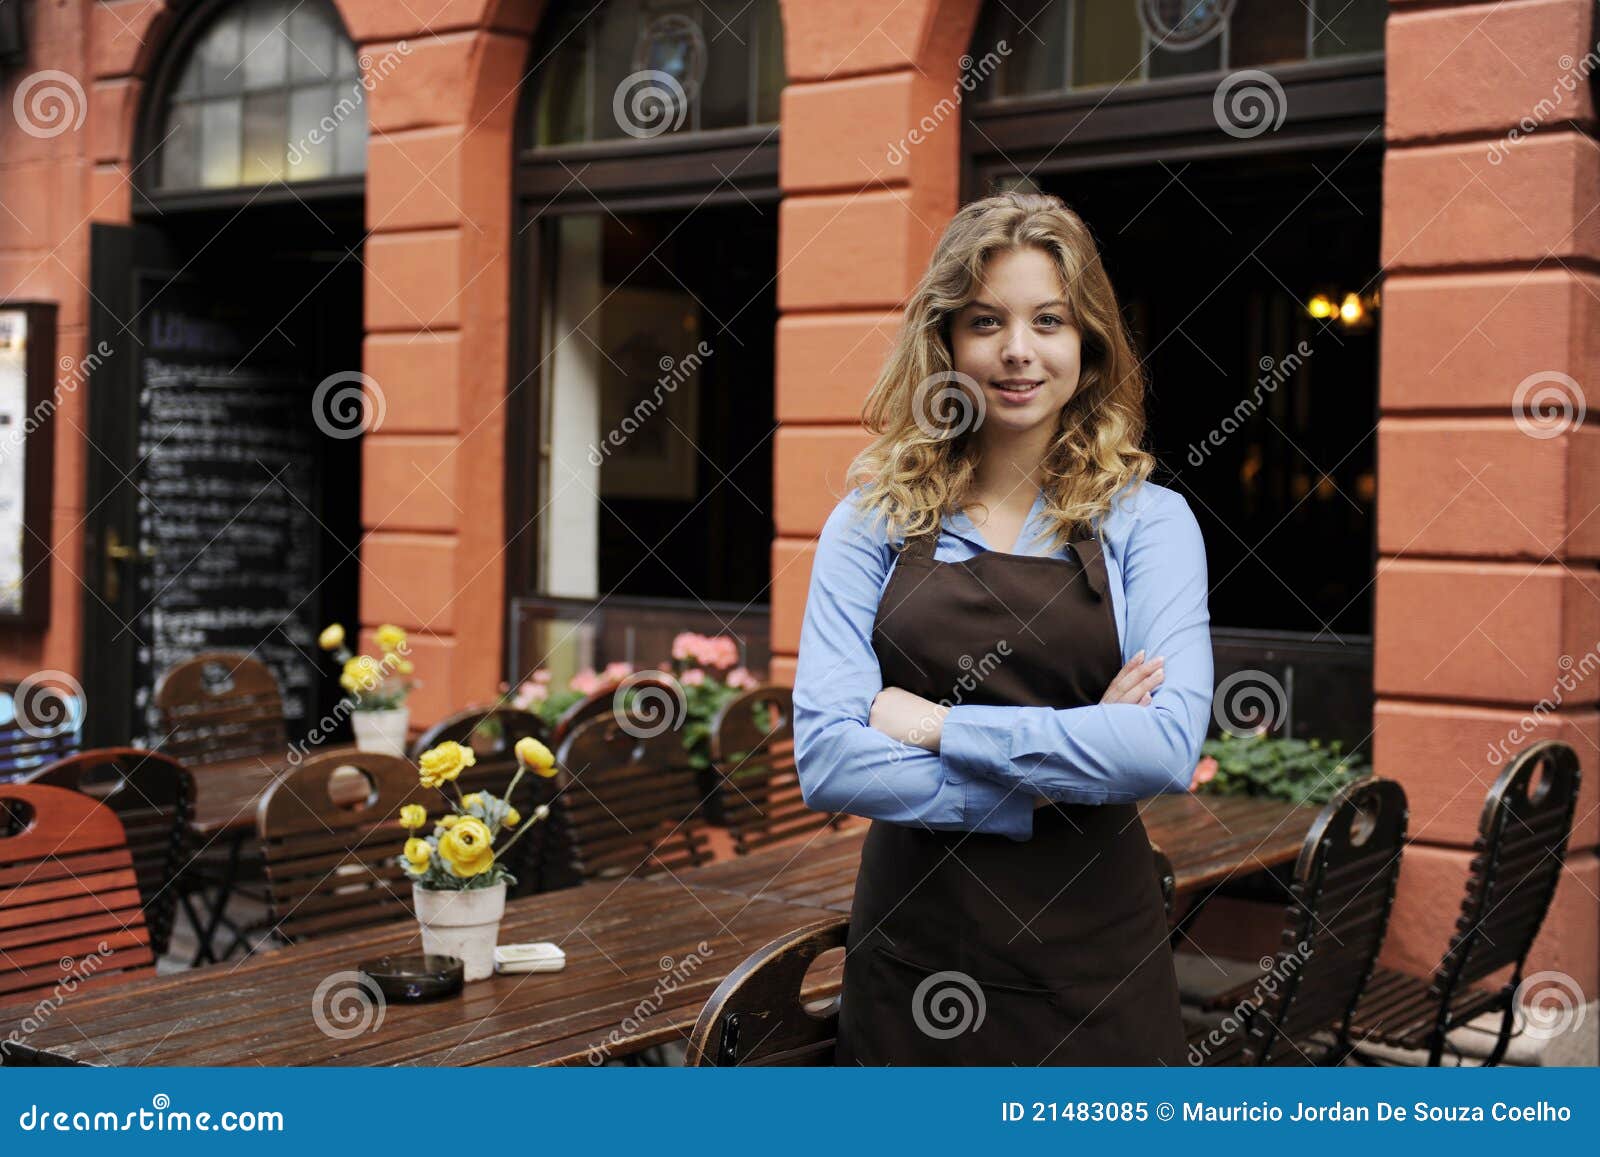 waitress in front of restaurant